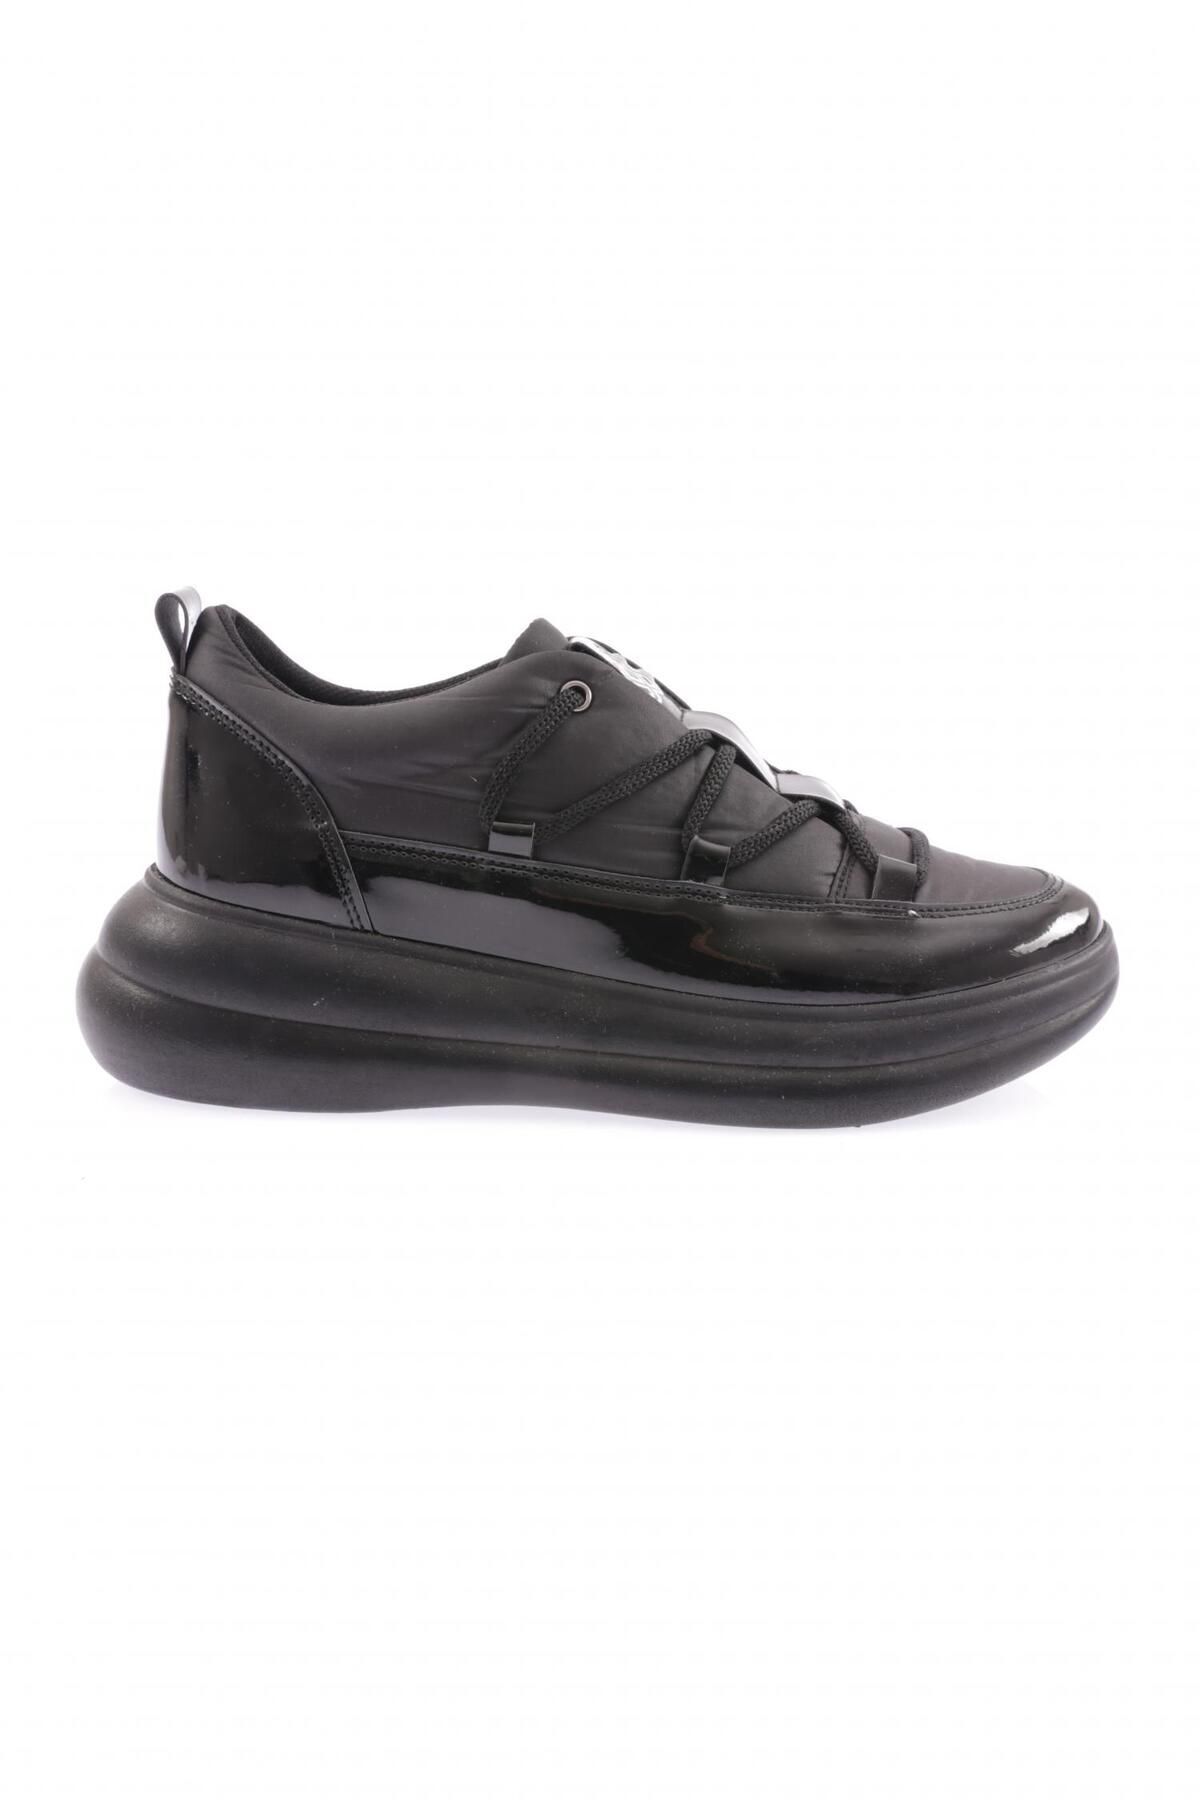 Dgn M709 Kadın Sneakers Ayakkabı Siyah